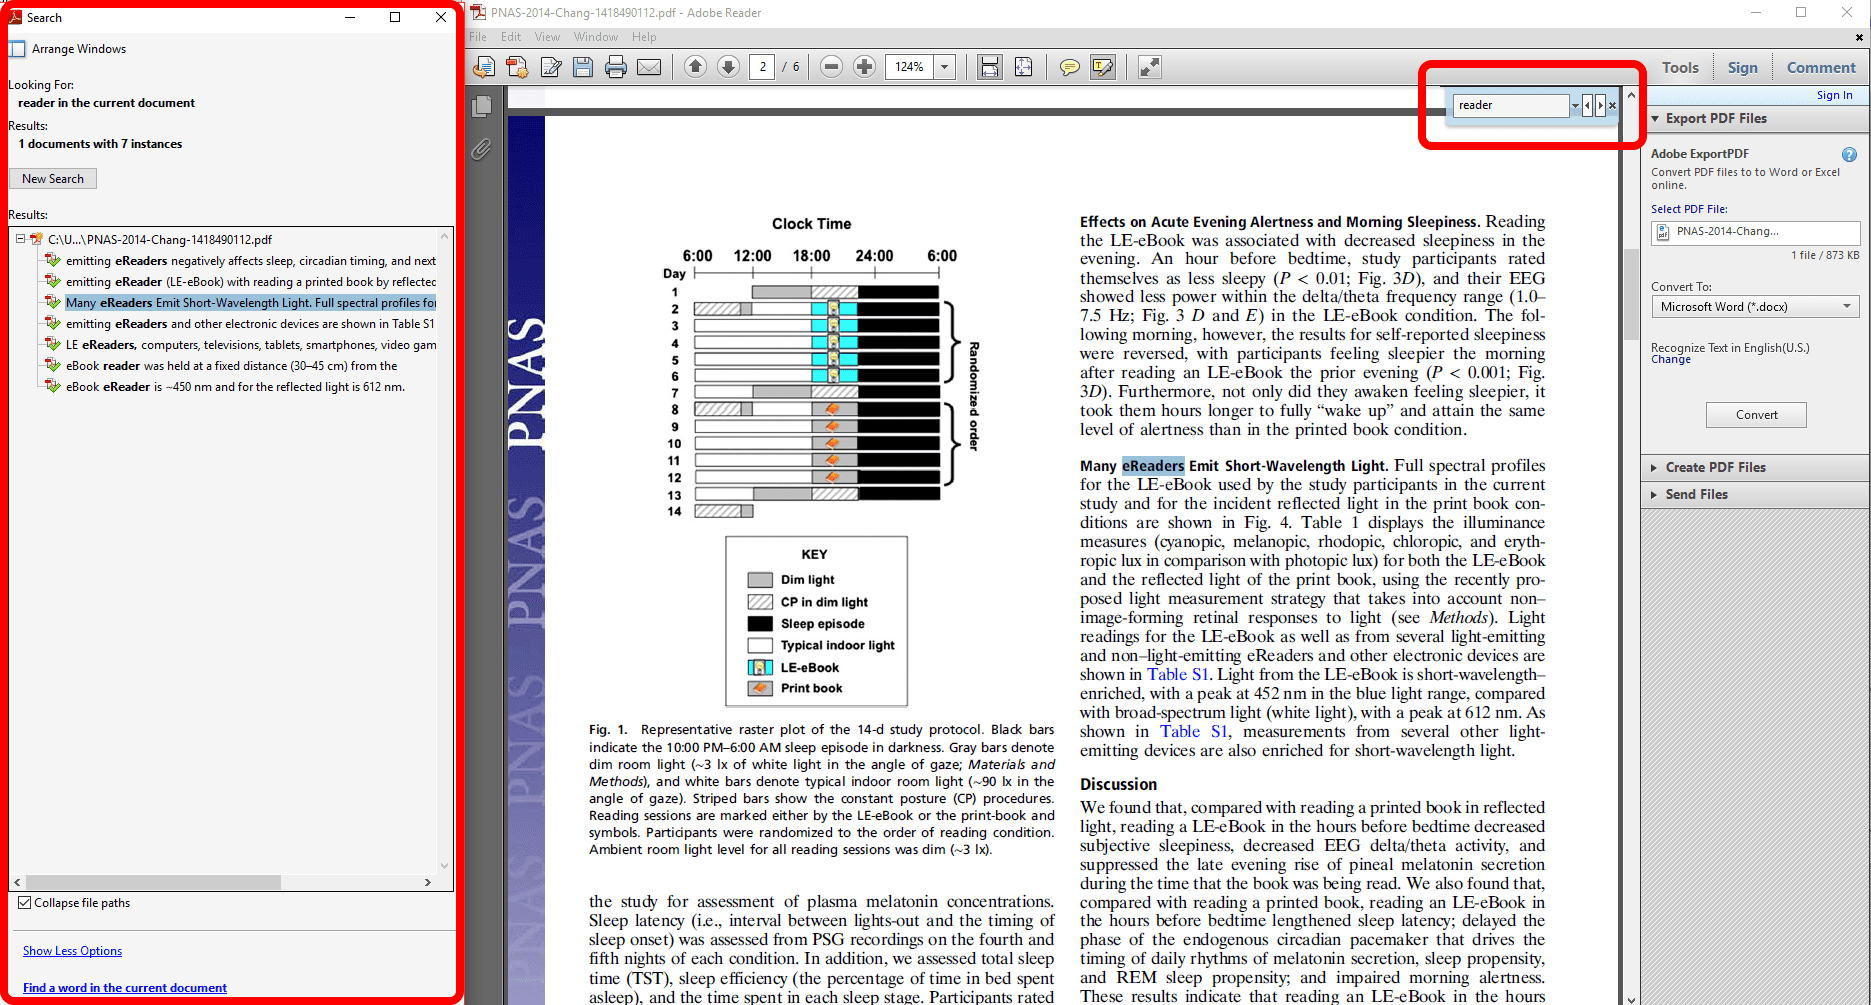 mac search tool for pdf